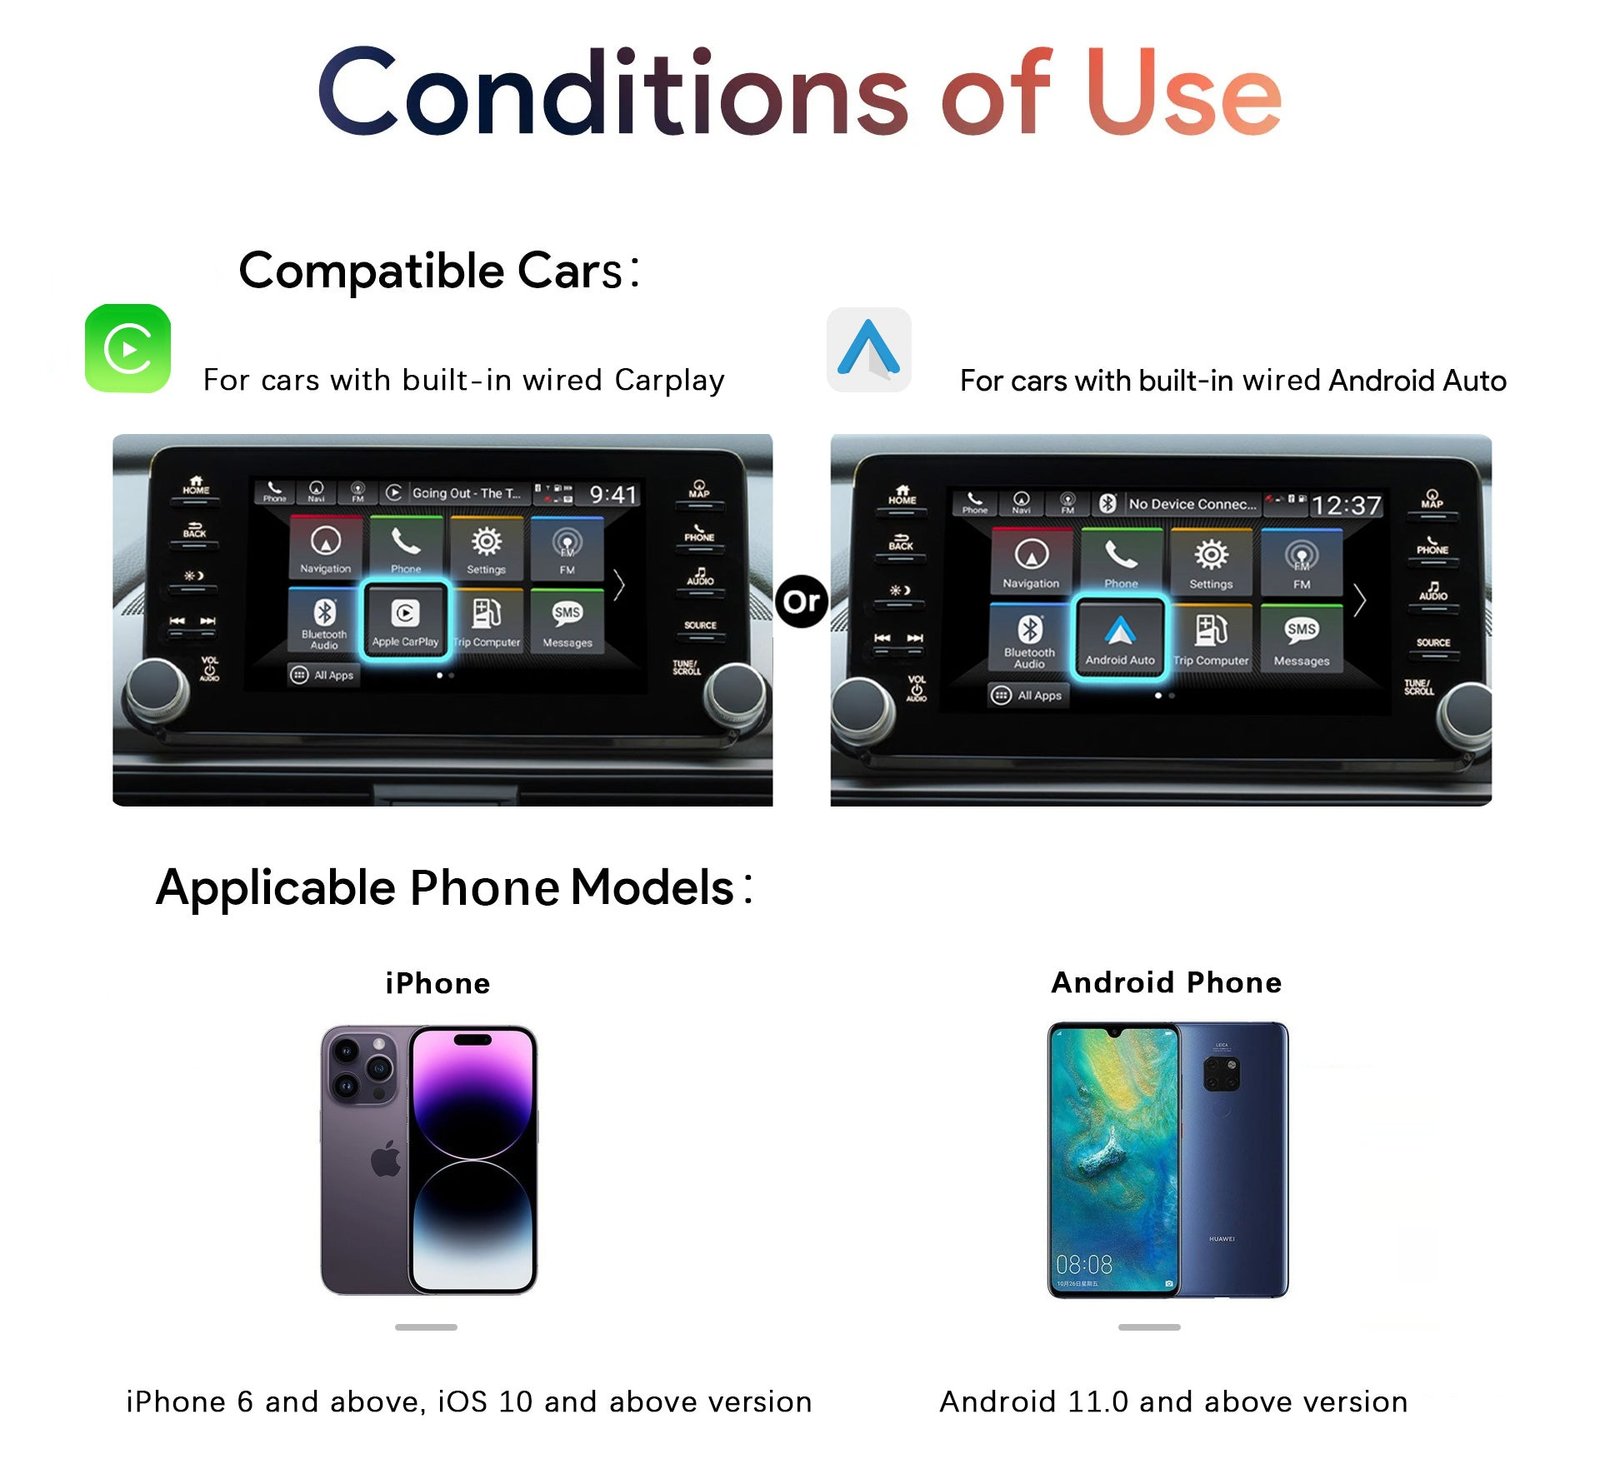 U2W Adapter Convert Wired CarPlay and AndroidAuto to Wireless